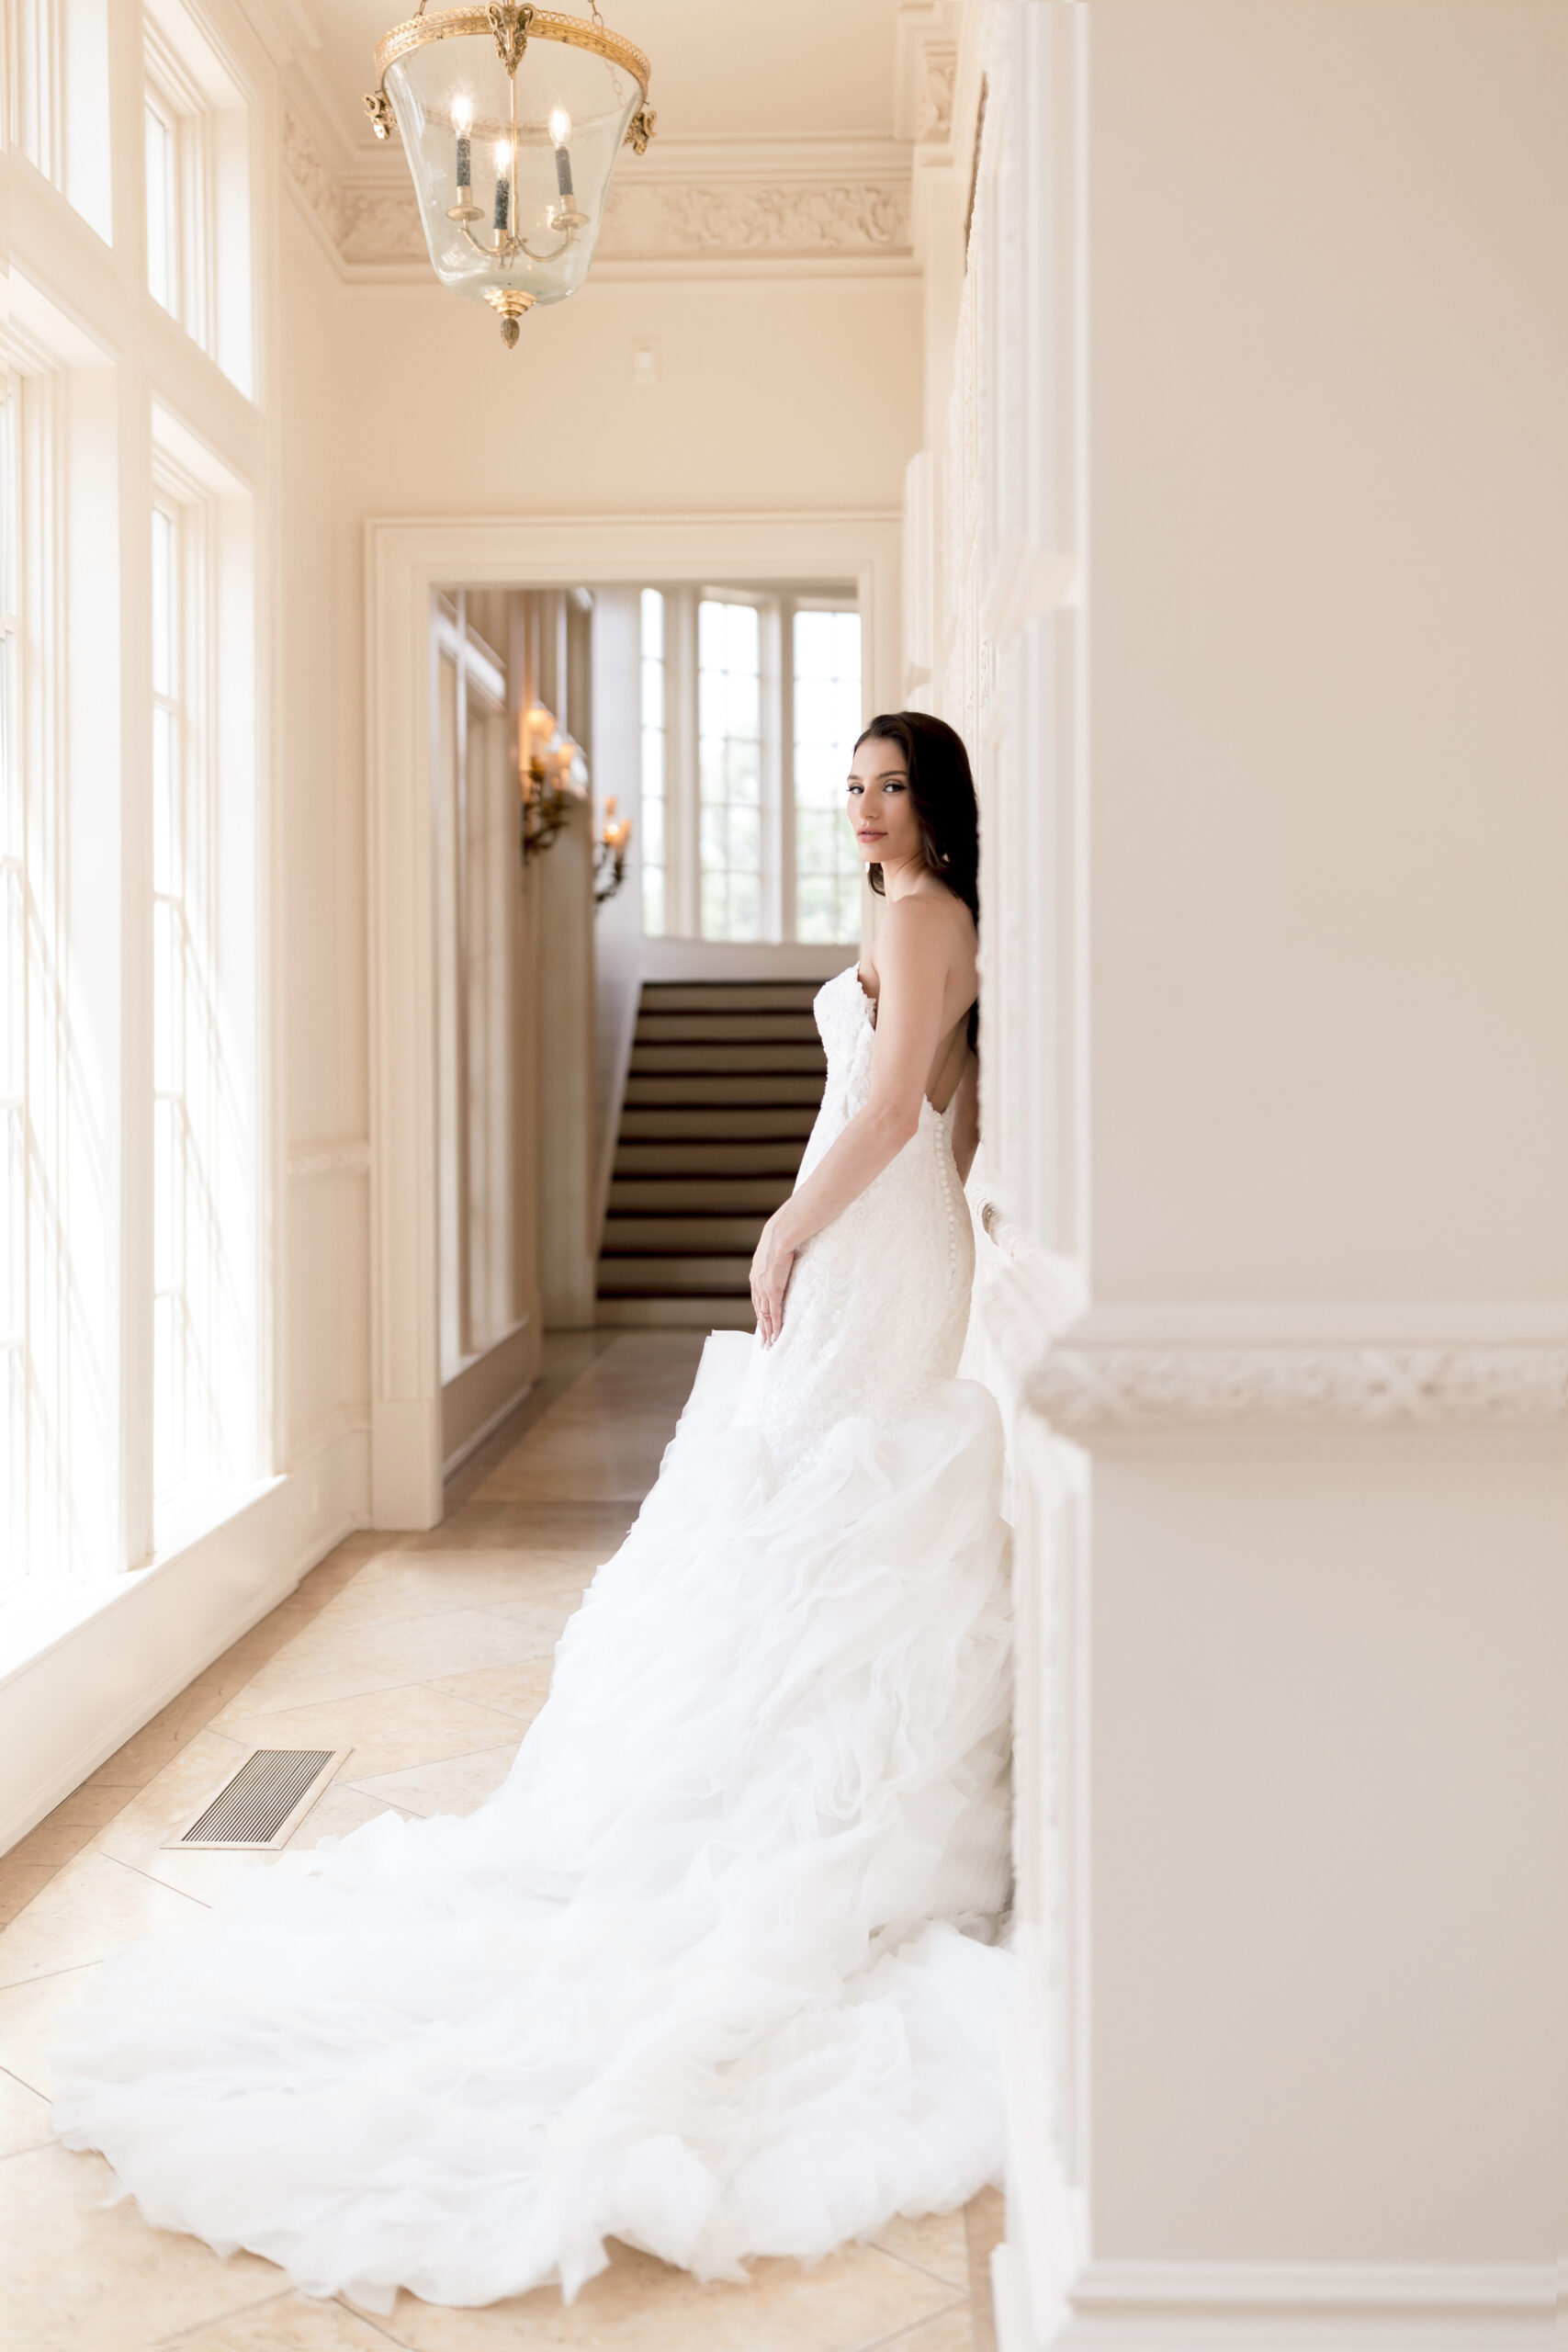 Bridal elegant Portrait by Photographer Tatyana Zadorin, Brides, bridal photoshoot